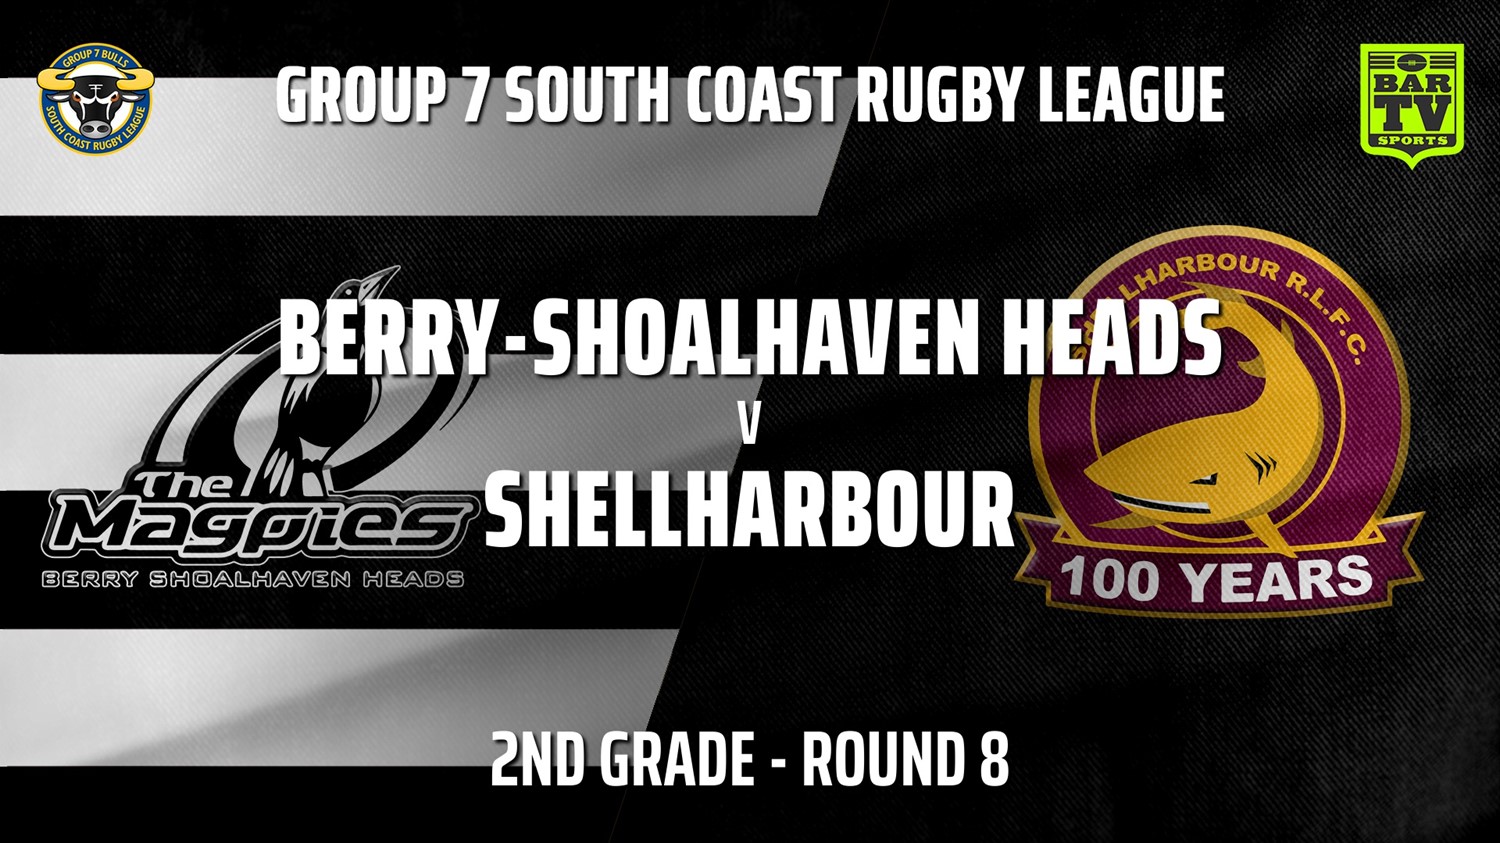 210605-Group 7 RL Round 8 - 2nd Grade - Berry-Shoalhaven Heads v Shellharbour Sharks Slate Image